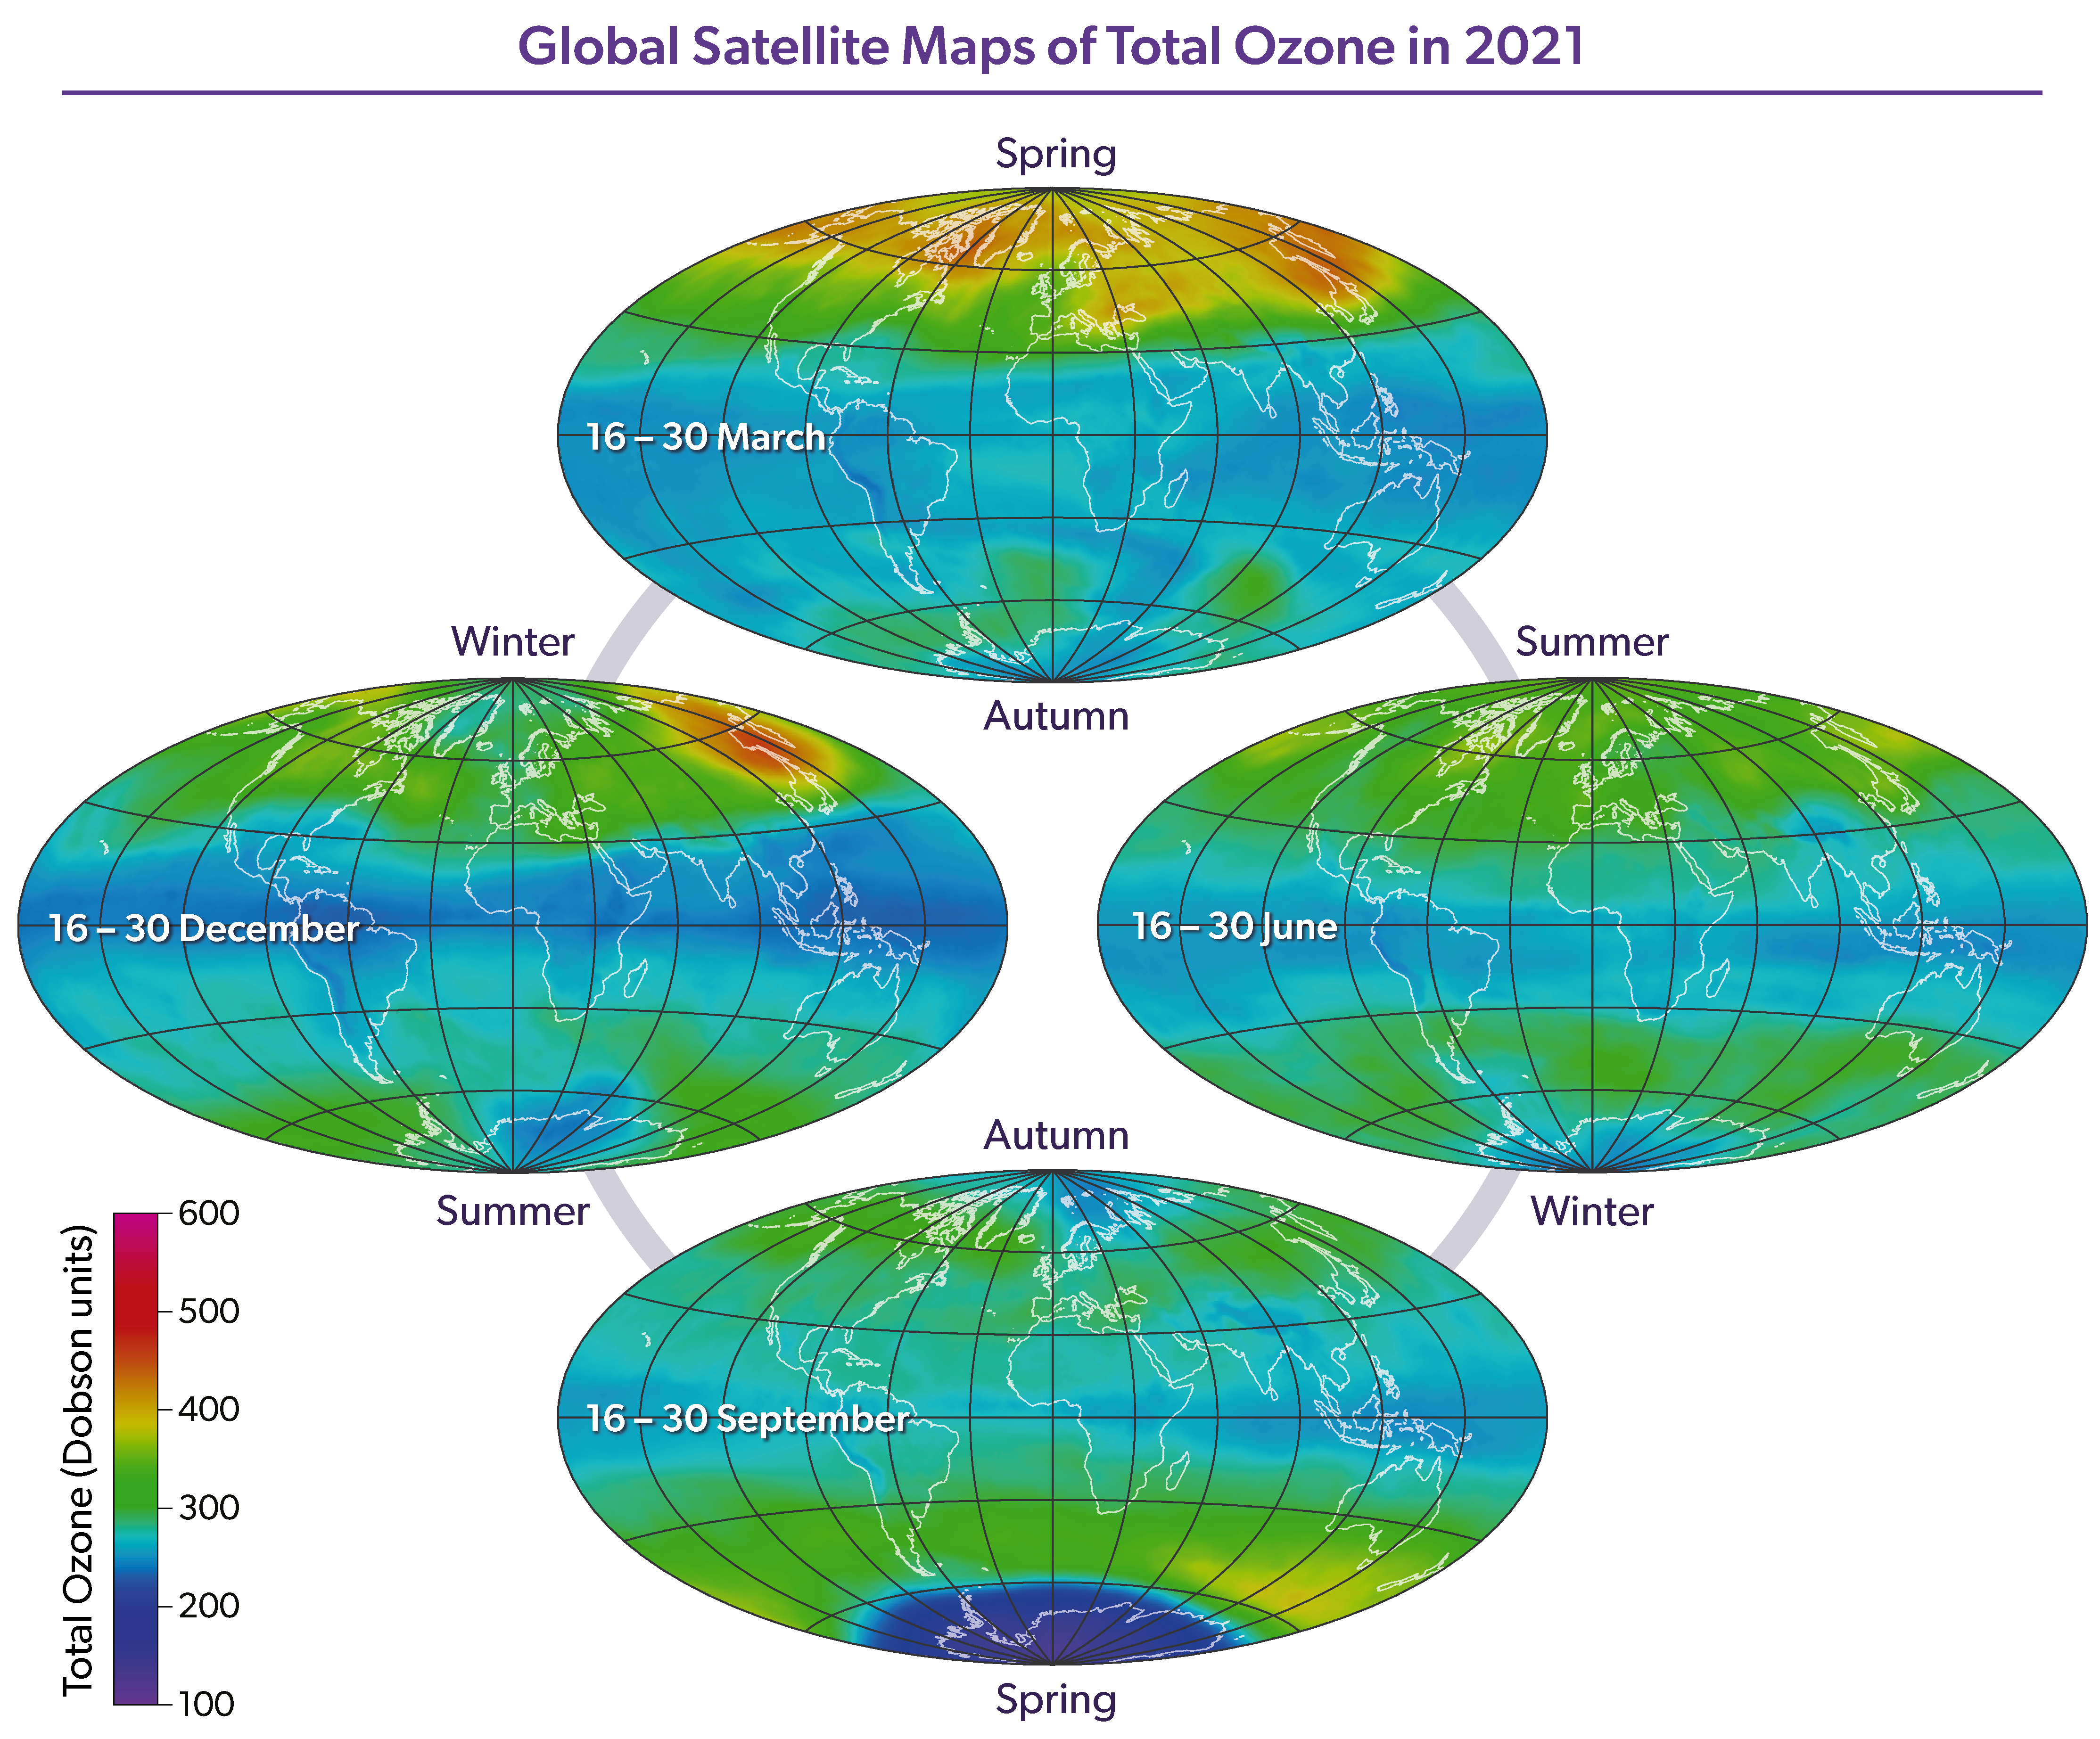 Global Satellite Maps of Total Ozone in 2021